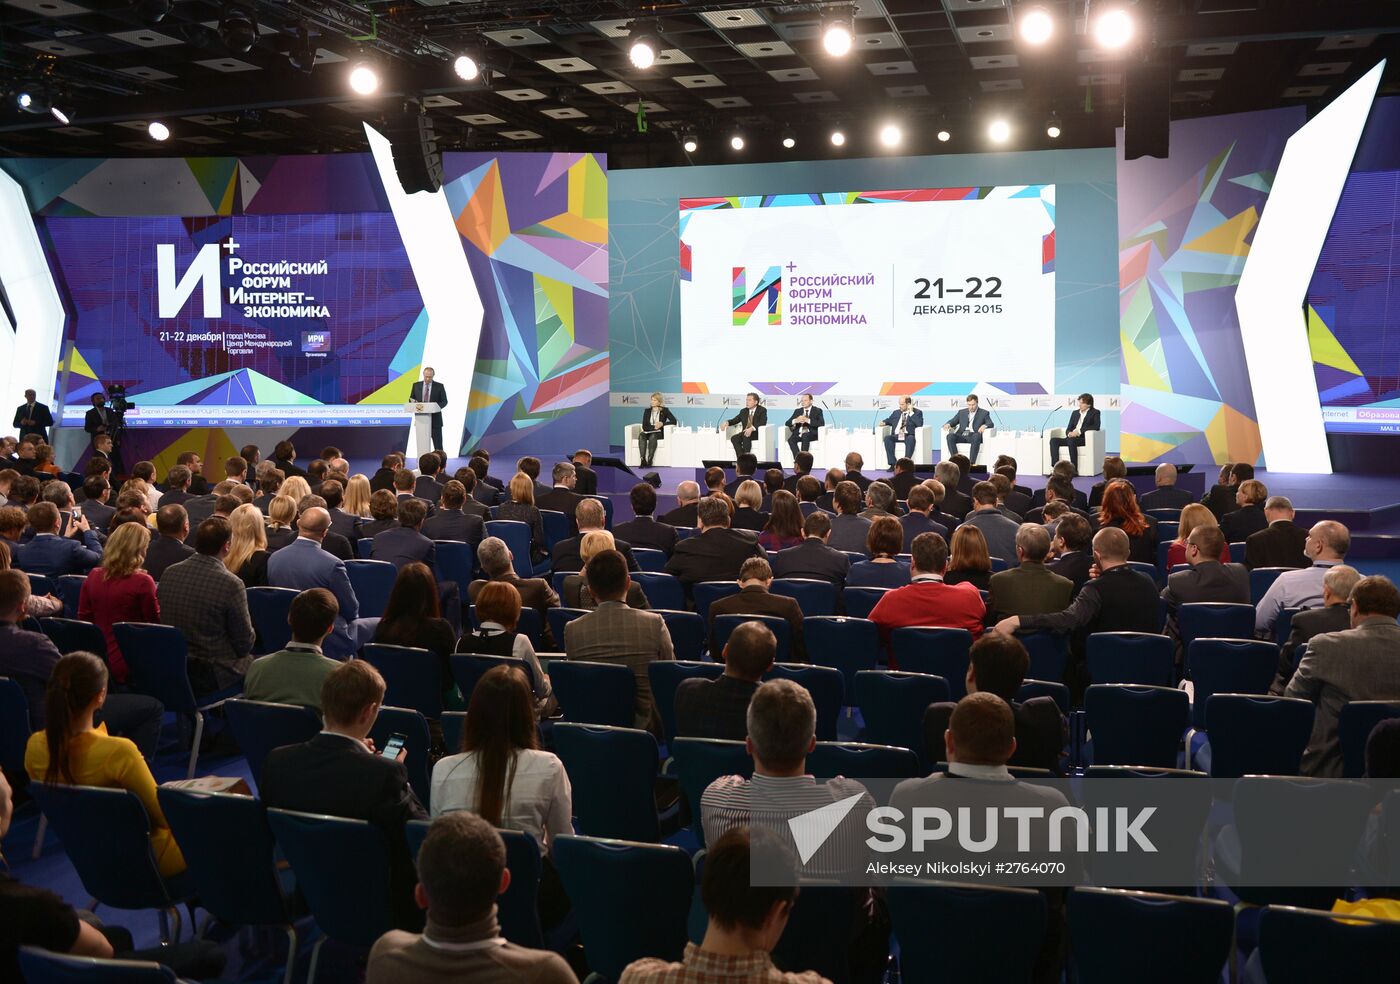 President Vladimir Putin takes part in plenary meeting of first Russian Internet Economy Forum